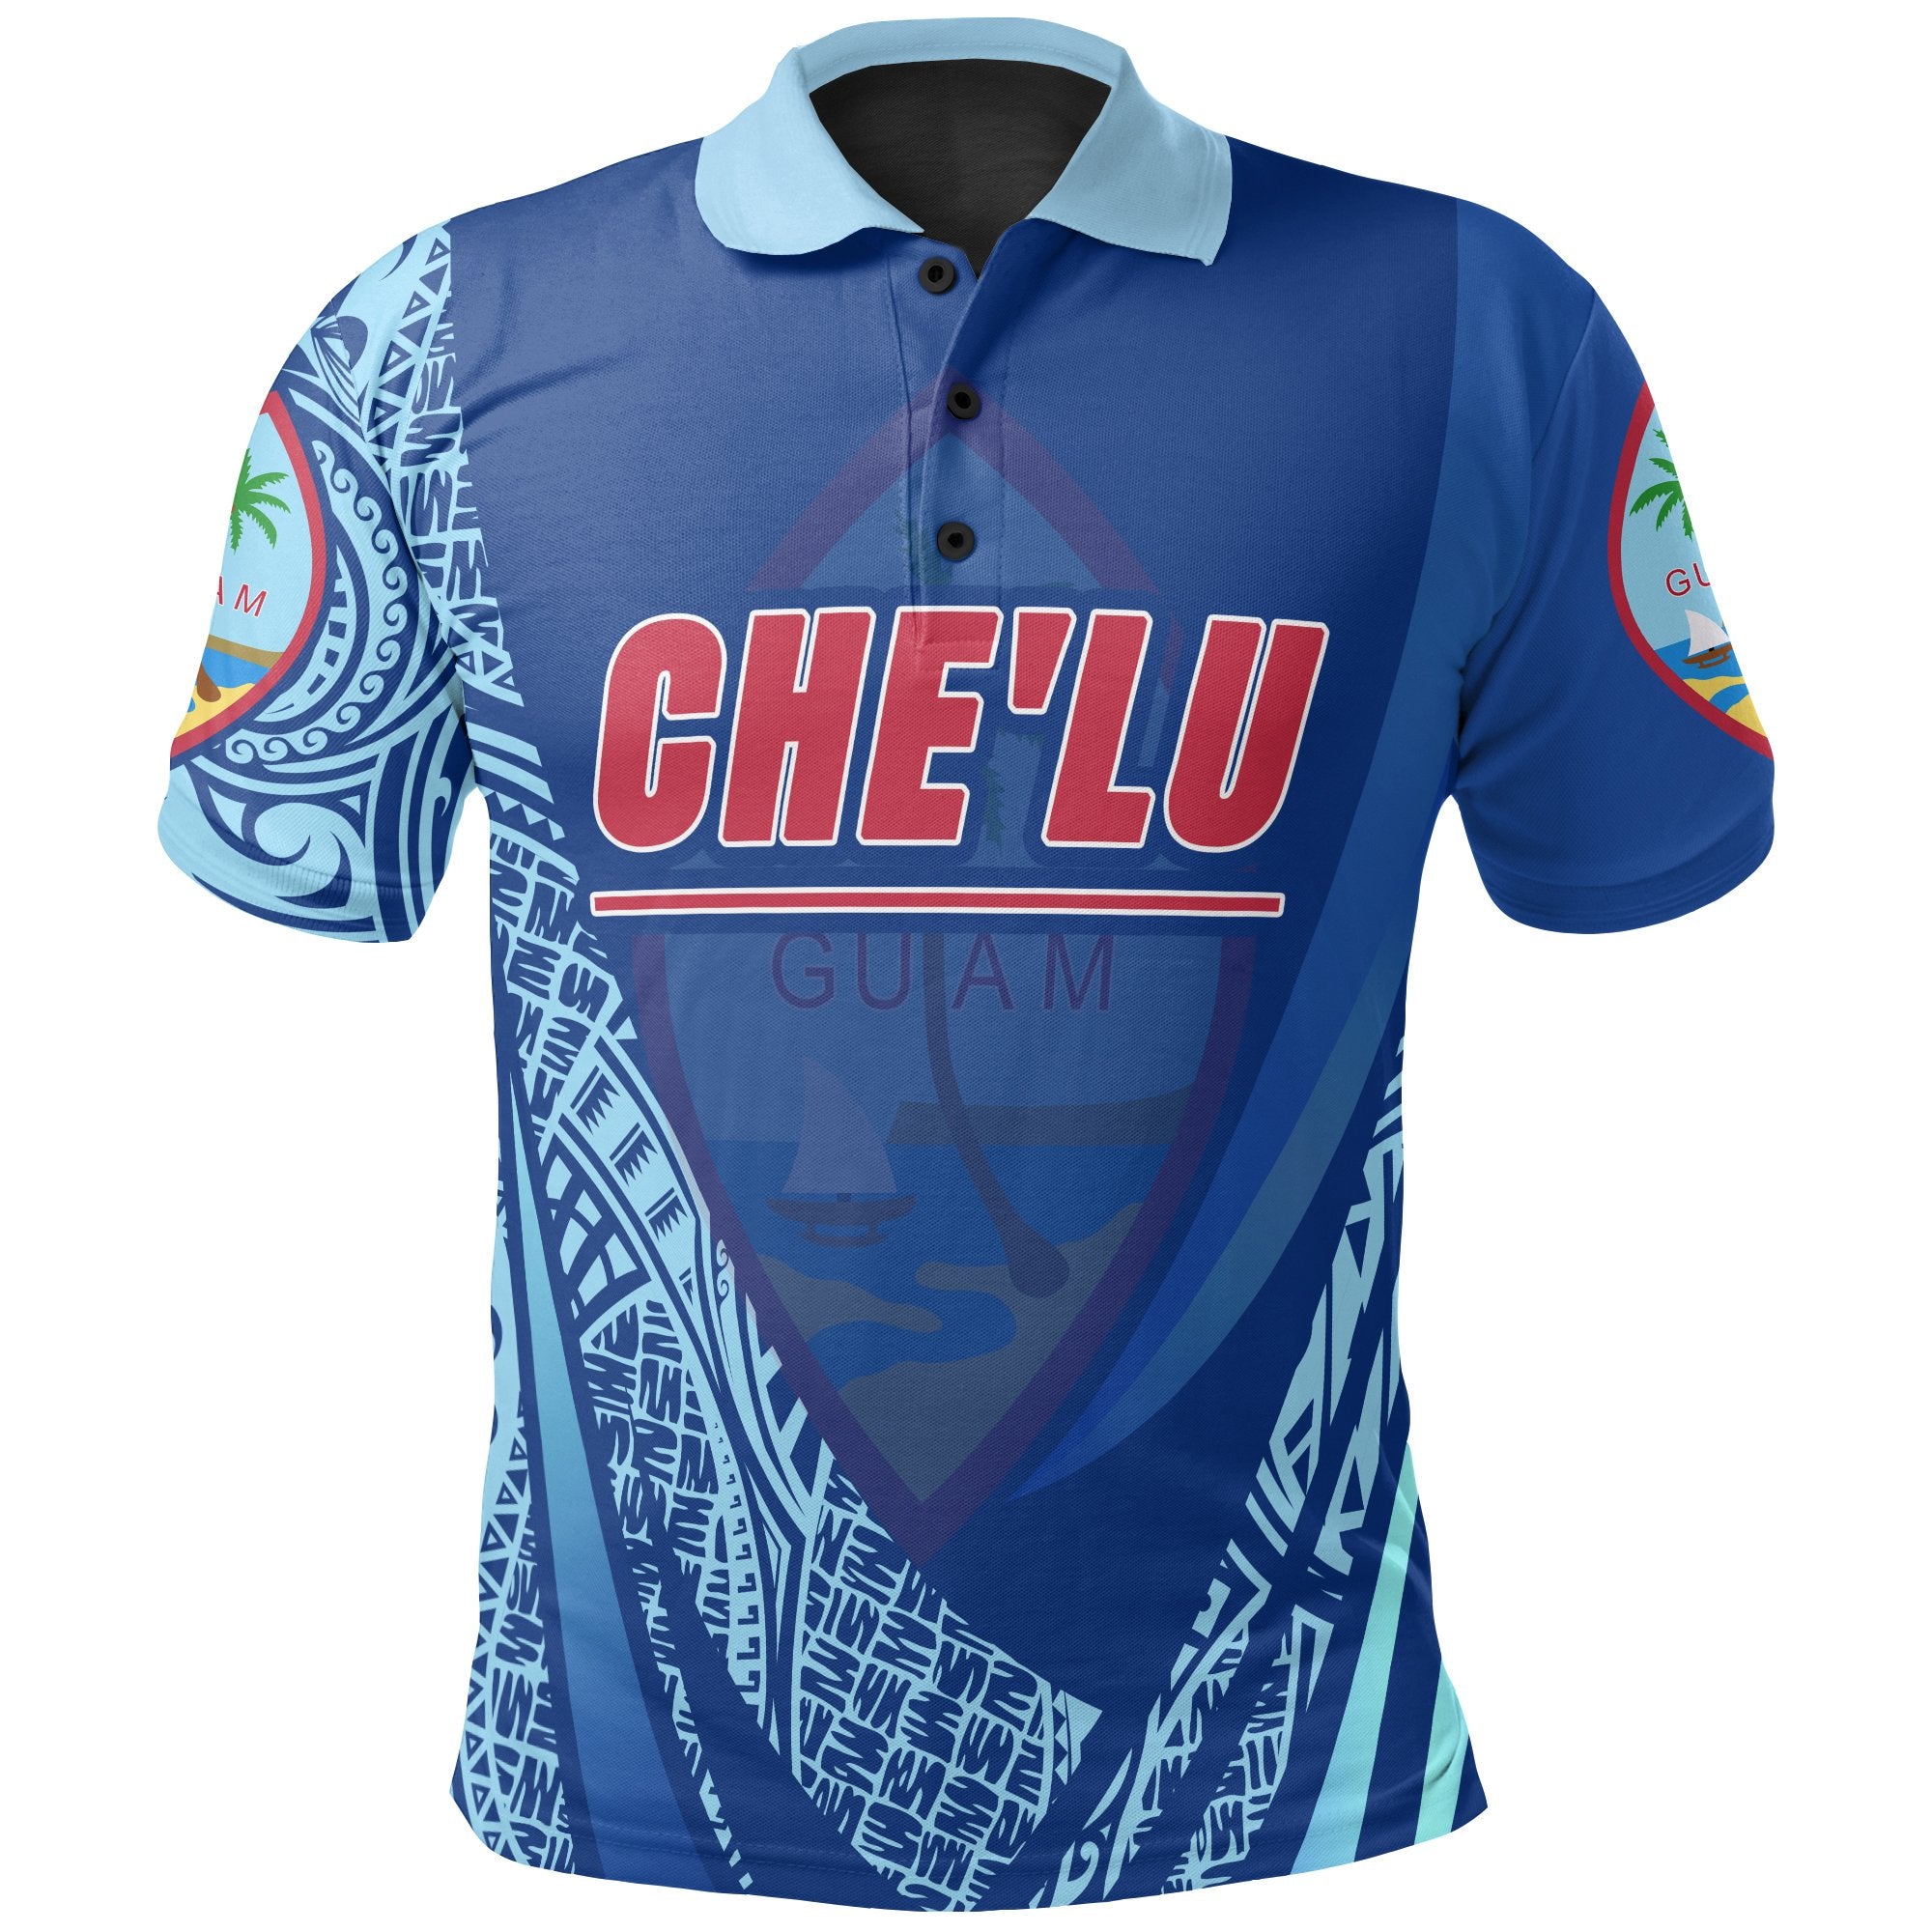 Guam Polo Shirt Chelu Polynesian Patterns Sport Style Unisex Blue - Polynesian Pride